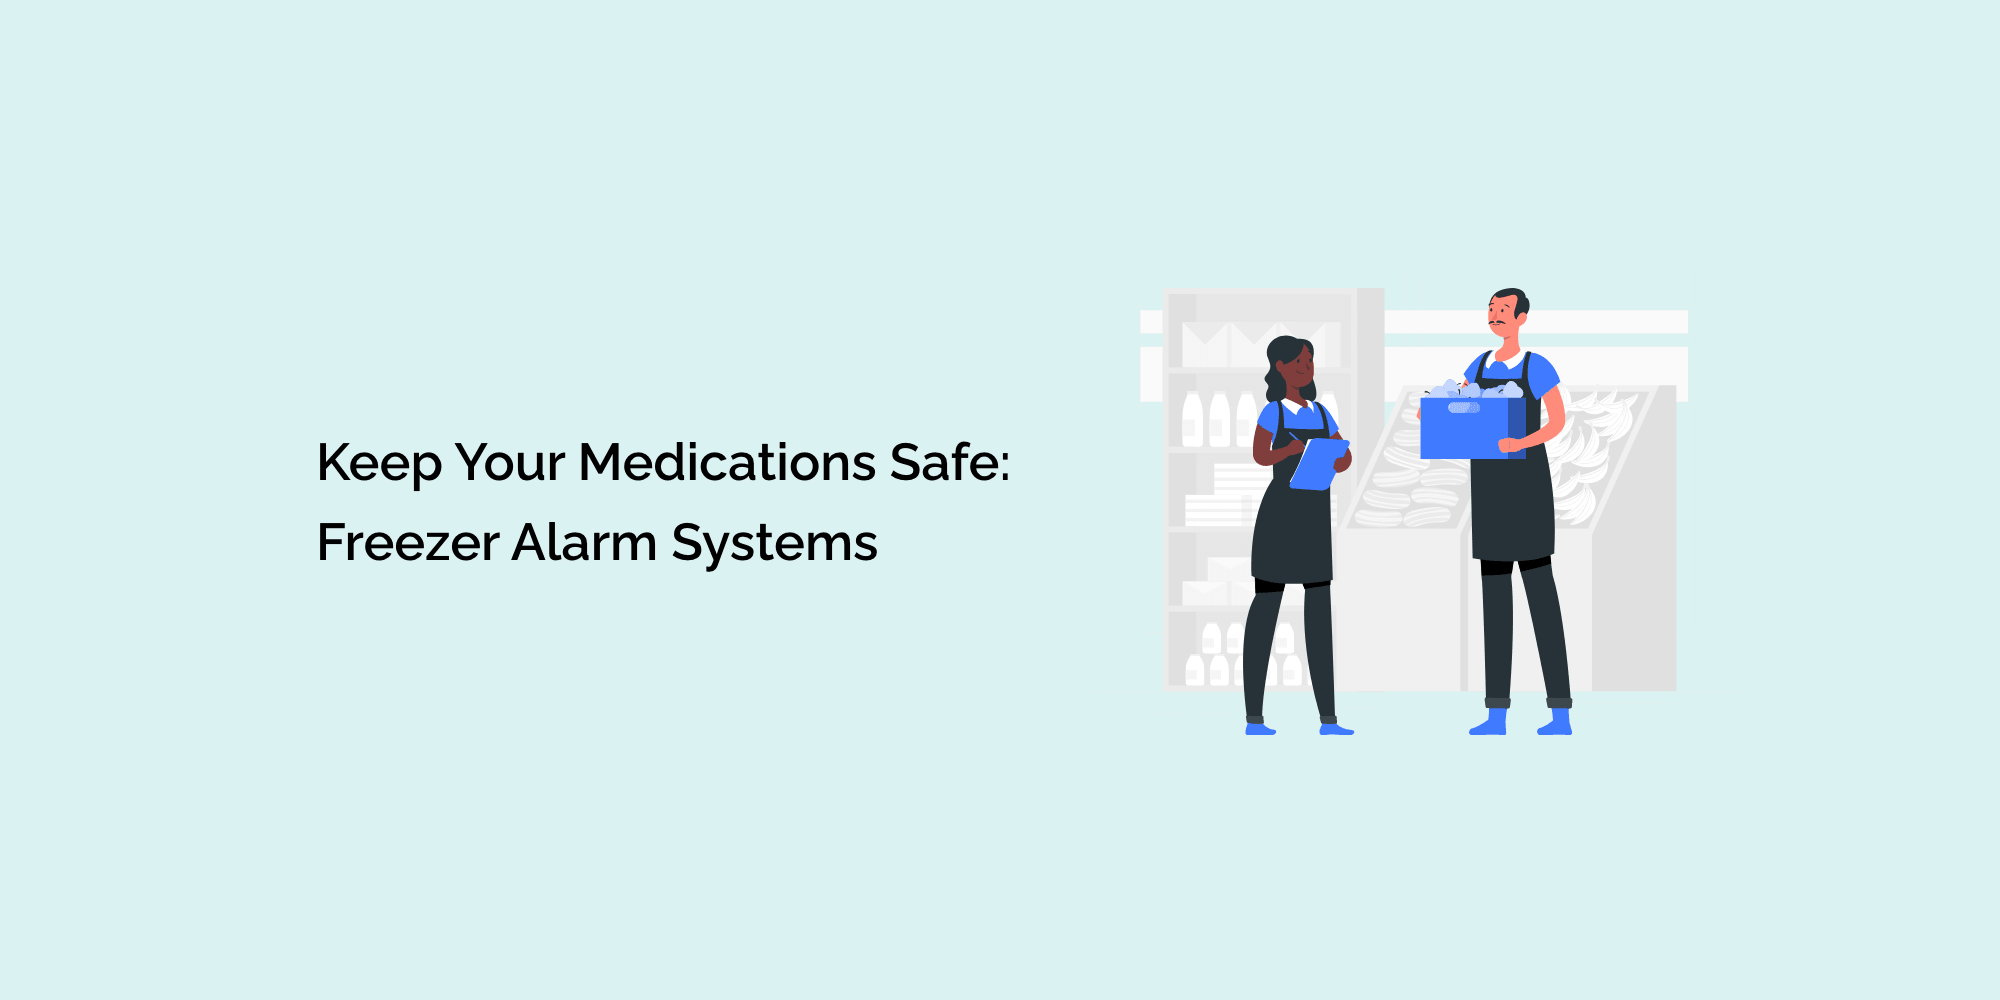 Keep Your Medications Safe: Freezer Alarm Systems